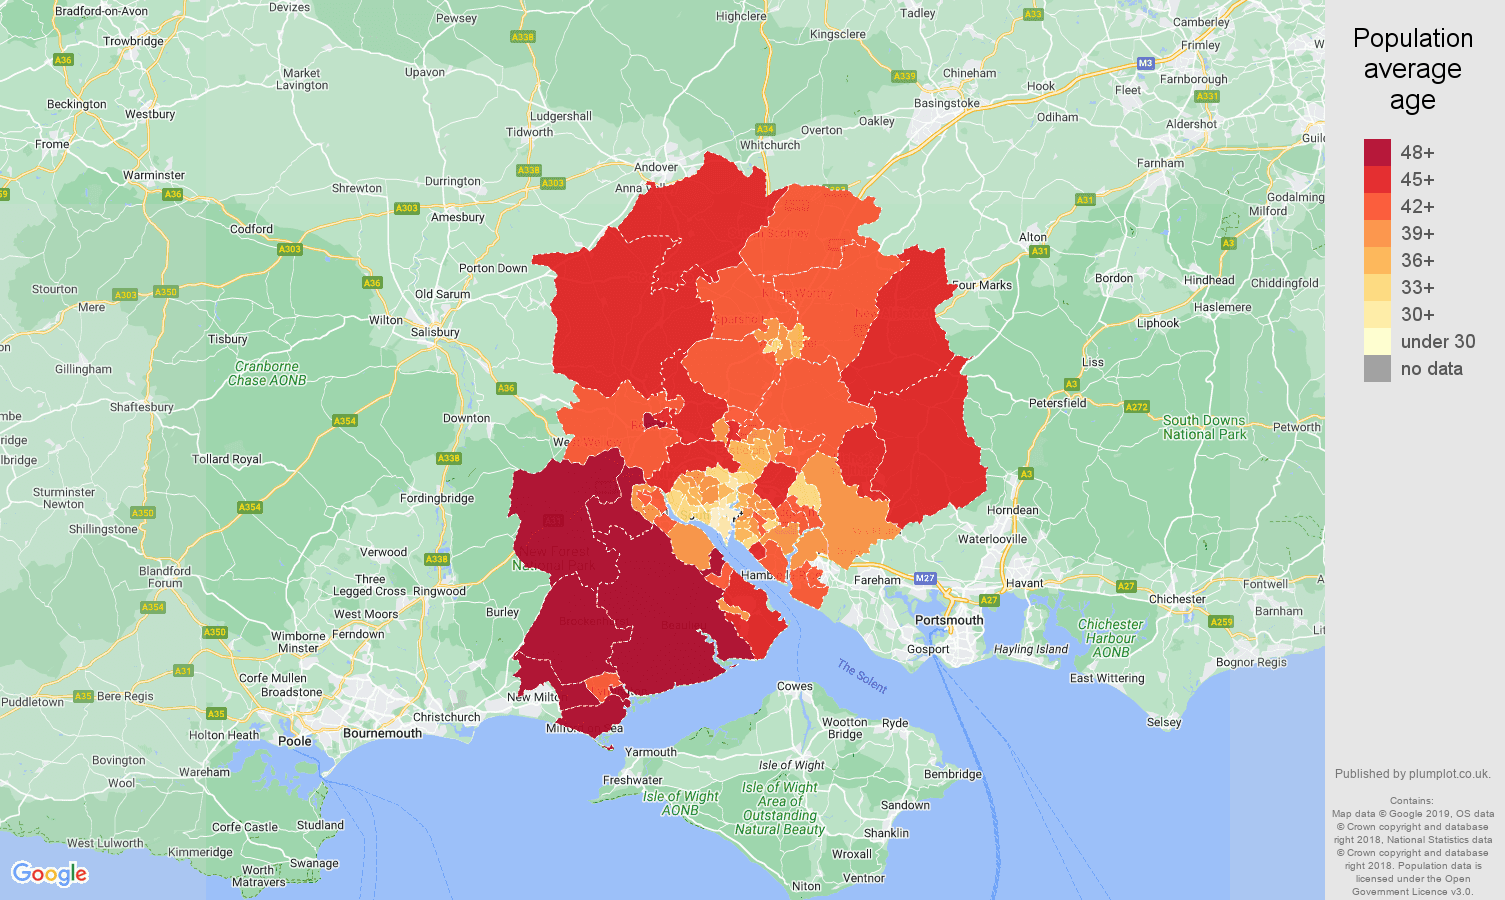 Southampton population average age map